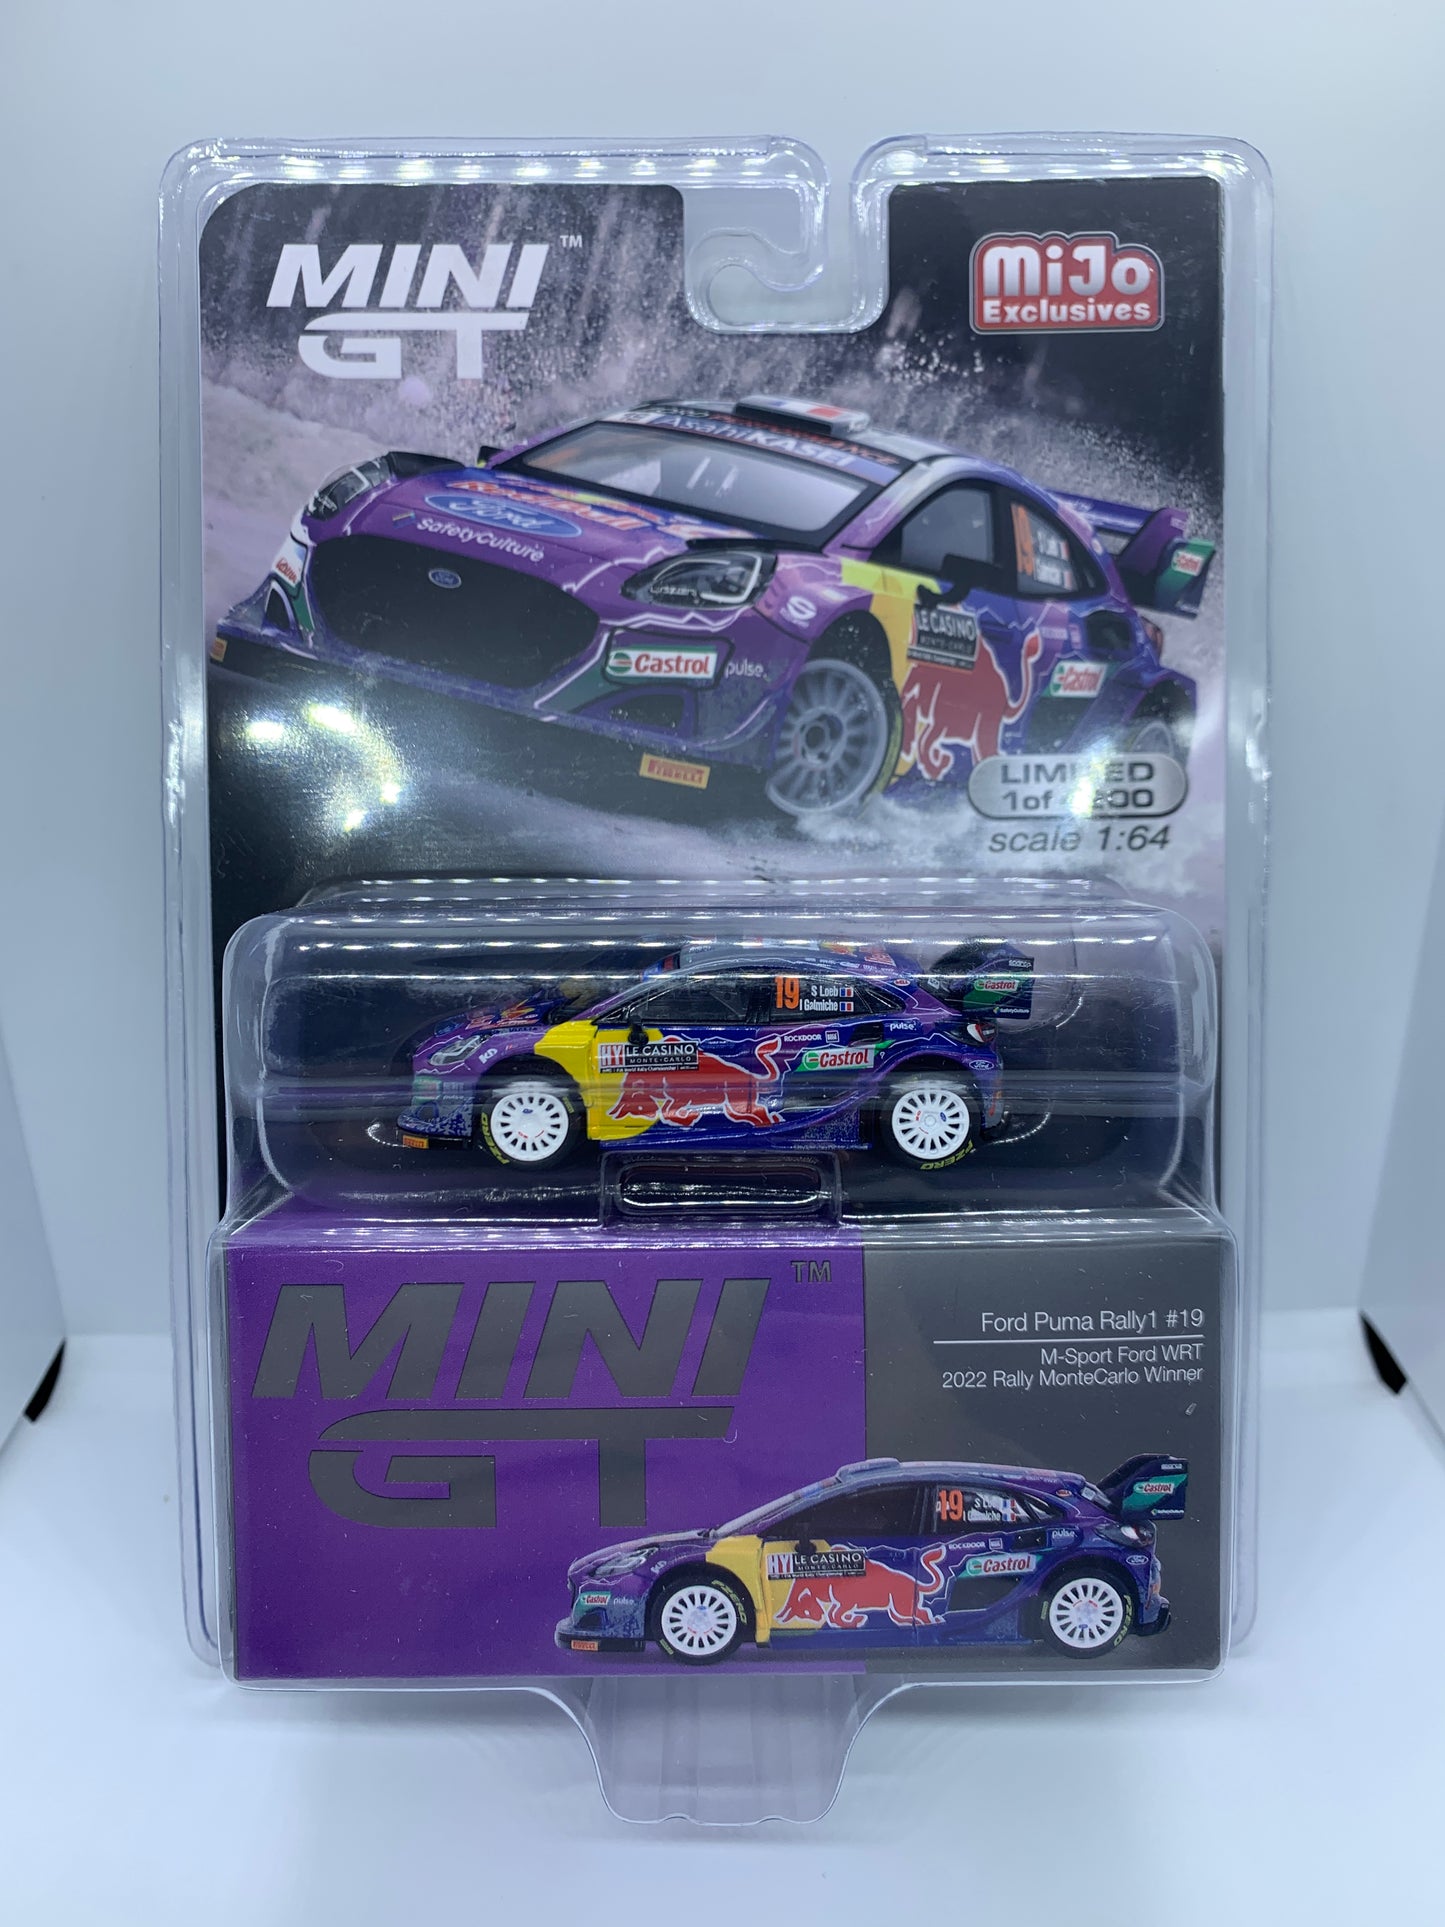 MINI GT - Ford Racing Puma WRC - Display Blister Packaging